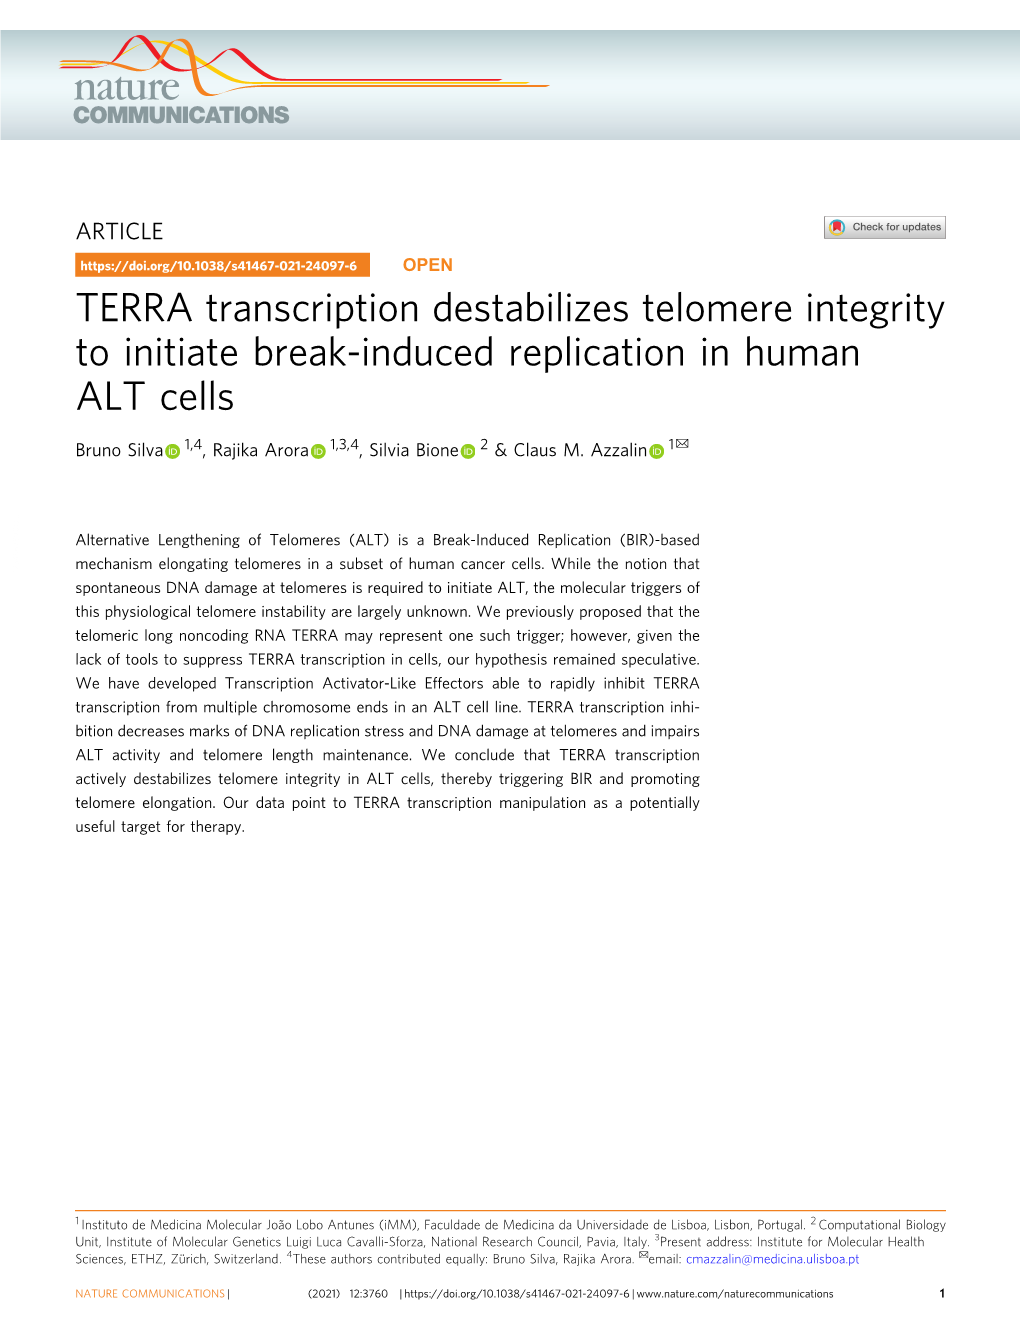 TERRA Transcription Destabilizes Telomere Integrity to Initiate Break